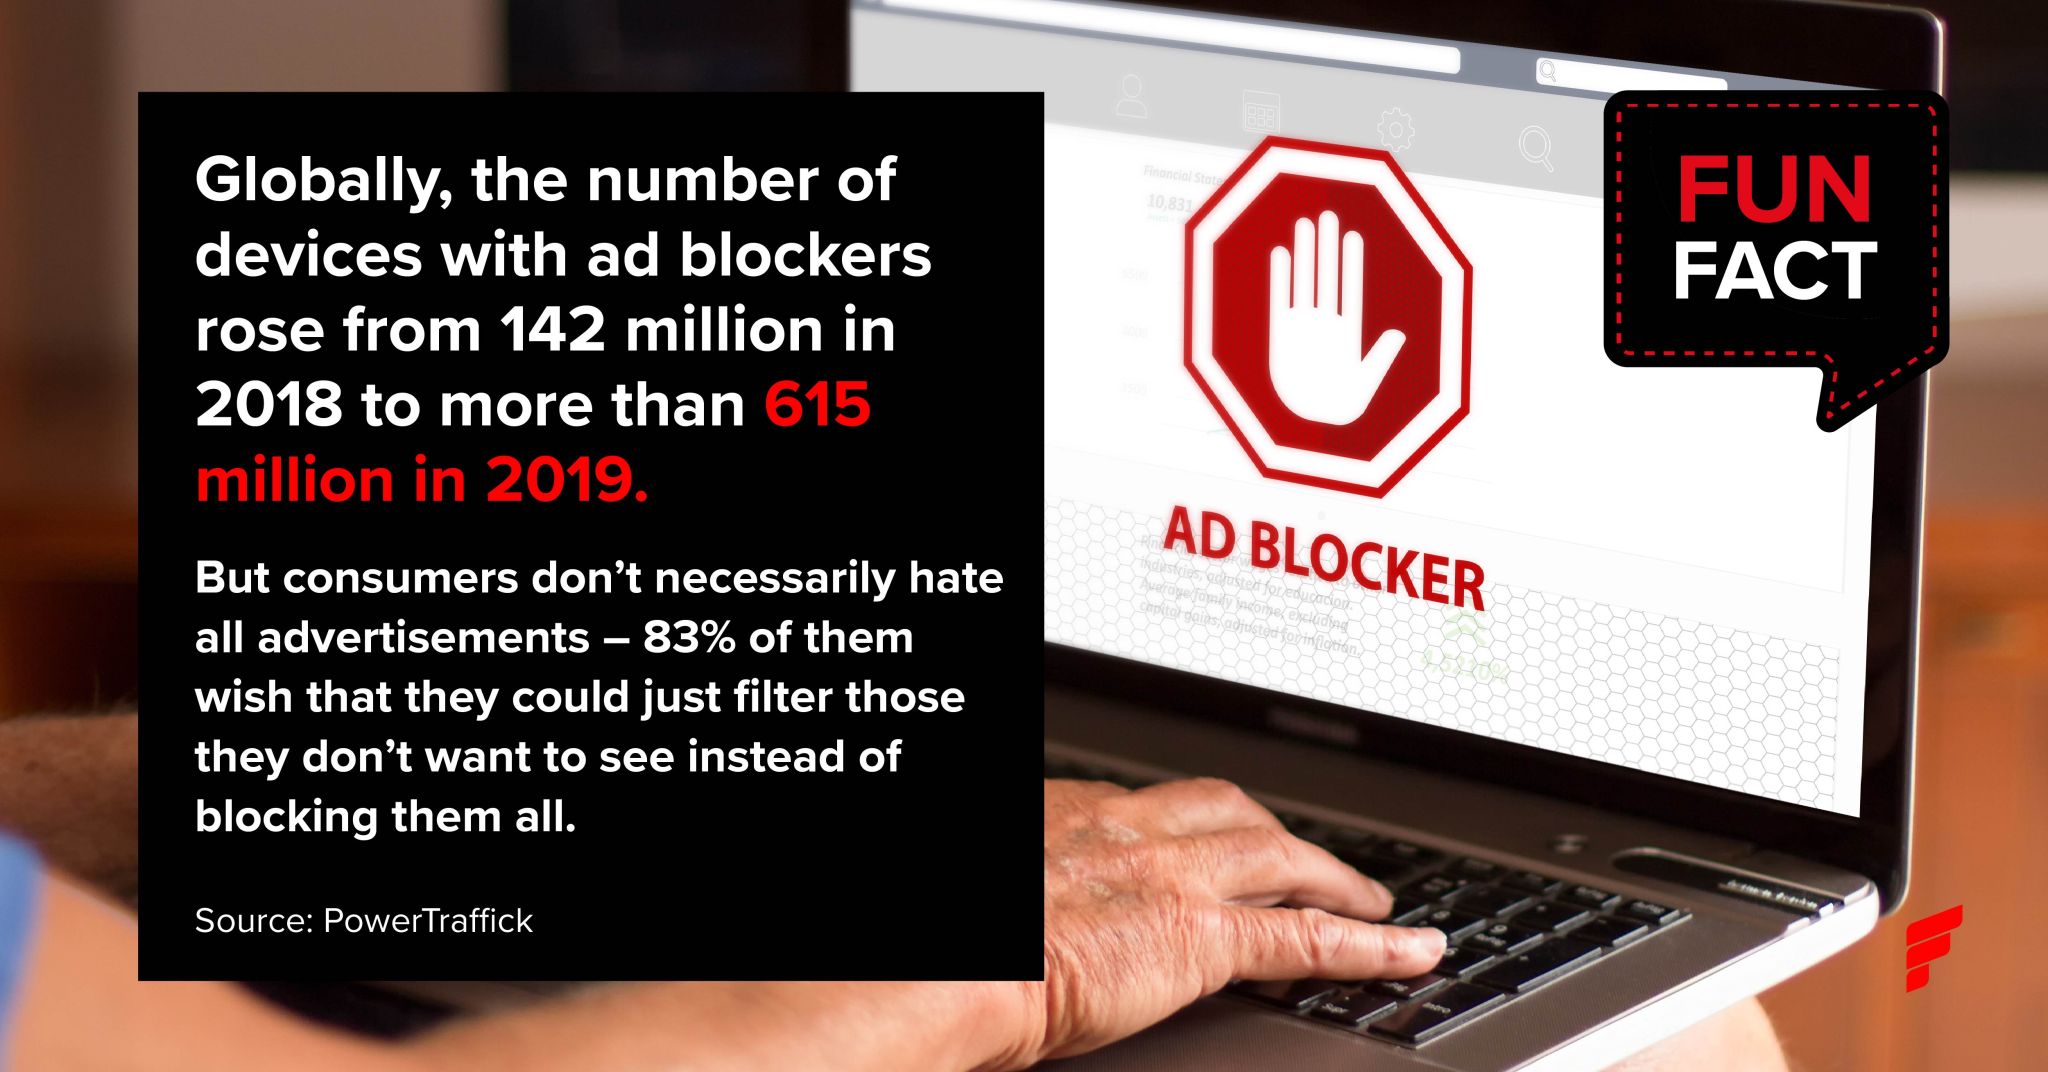 Fun fact ad blockers